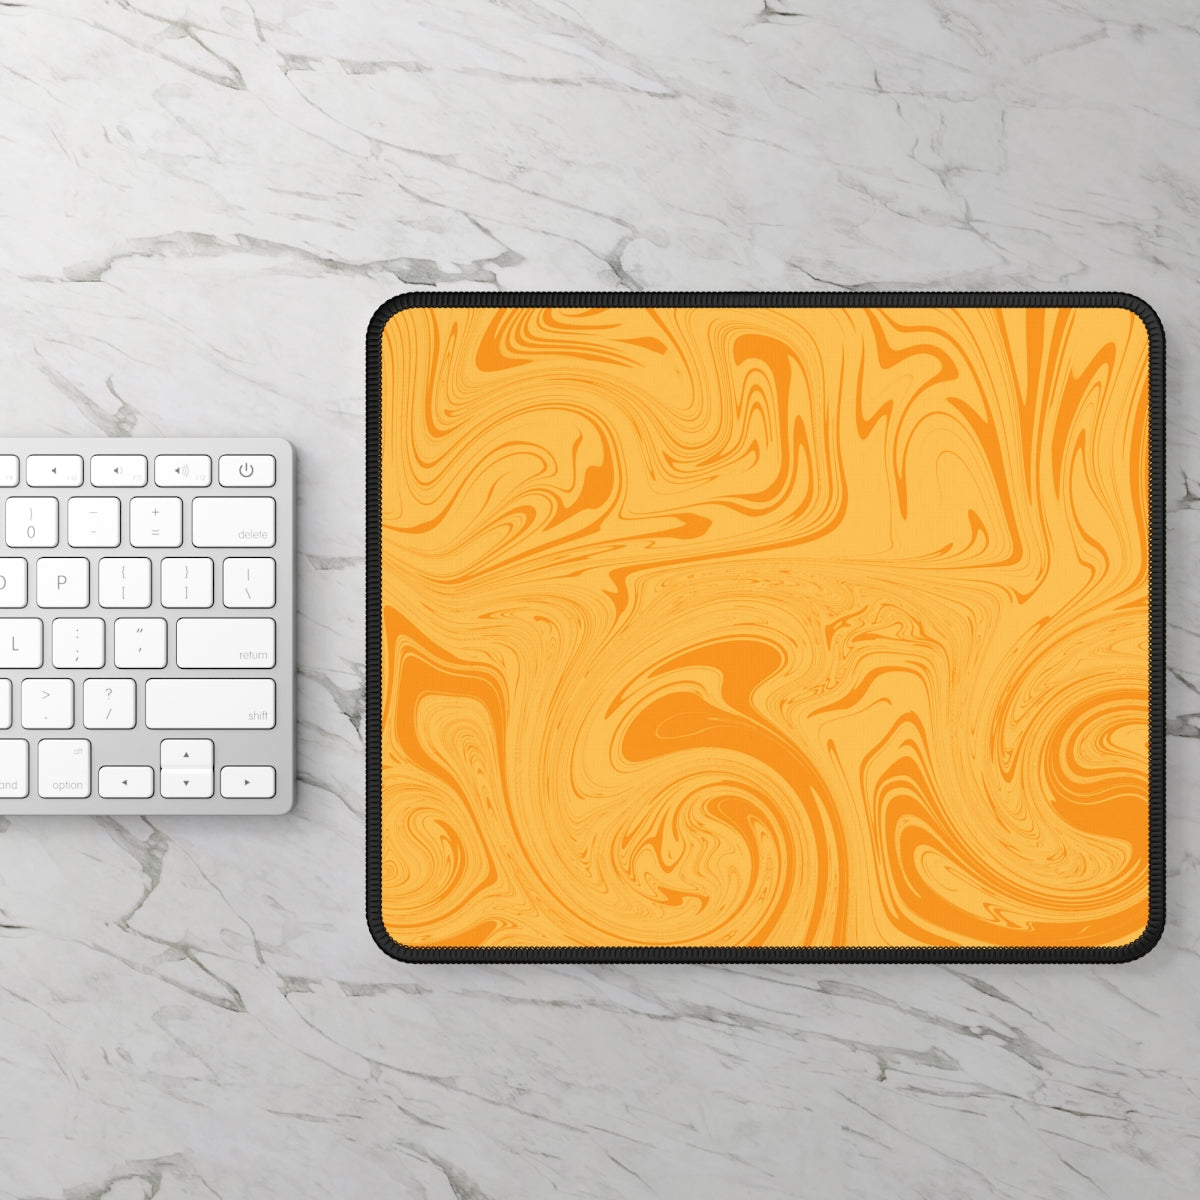 Orange Swirl Gaming Mouse Pad - Desk Cookies